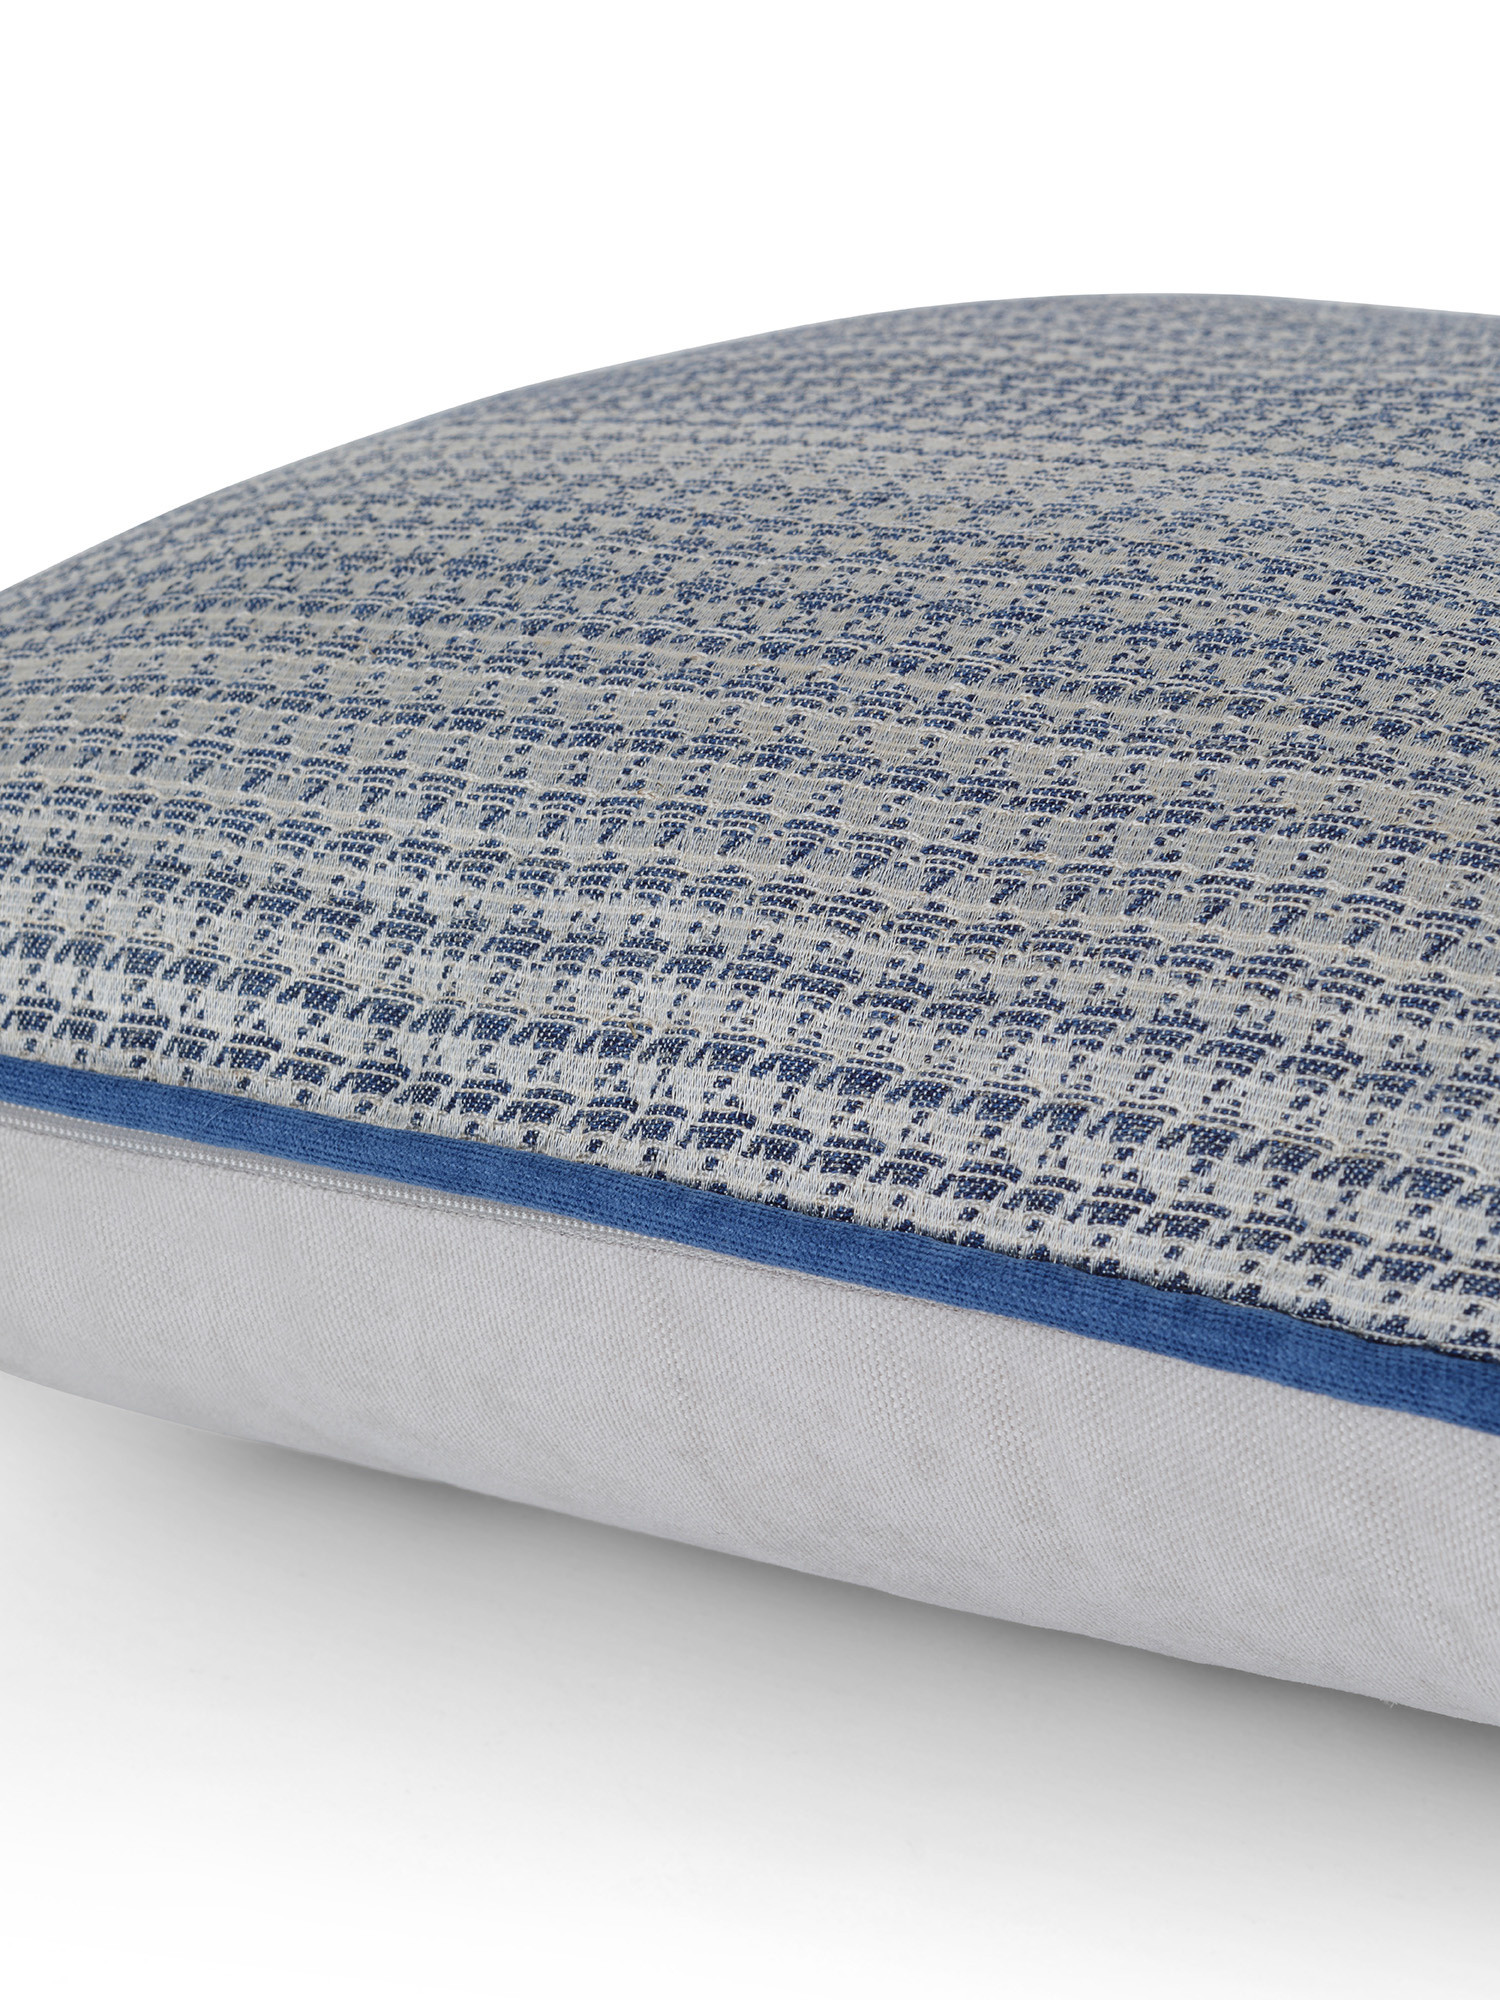 Houndstooth motif jacquard fabric cushion 45x45 cm, Light Grey, large image number 2